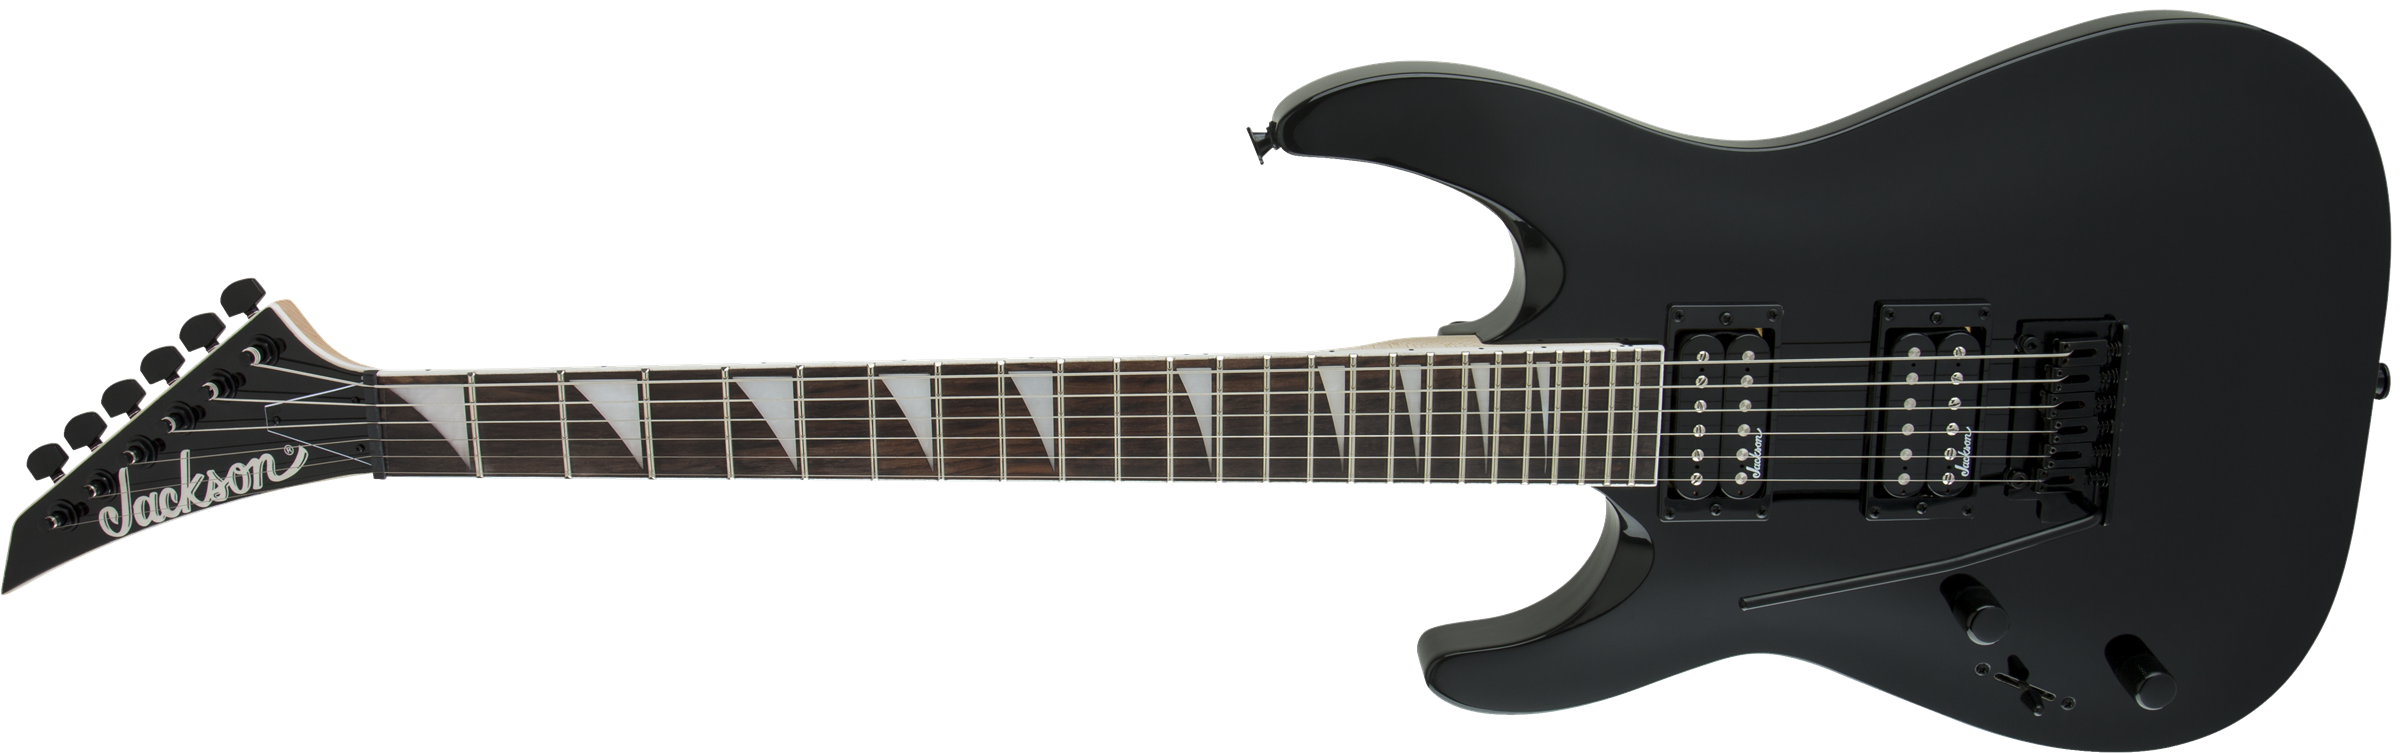 Comprar Jackson Js Series Dinky JS22 Dka Guitarra | Musicopolix